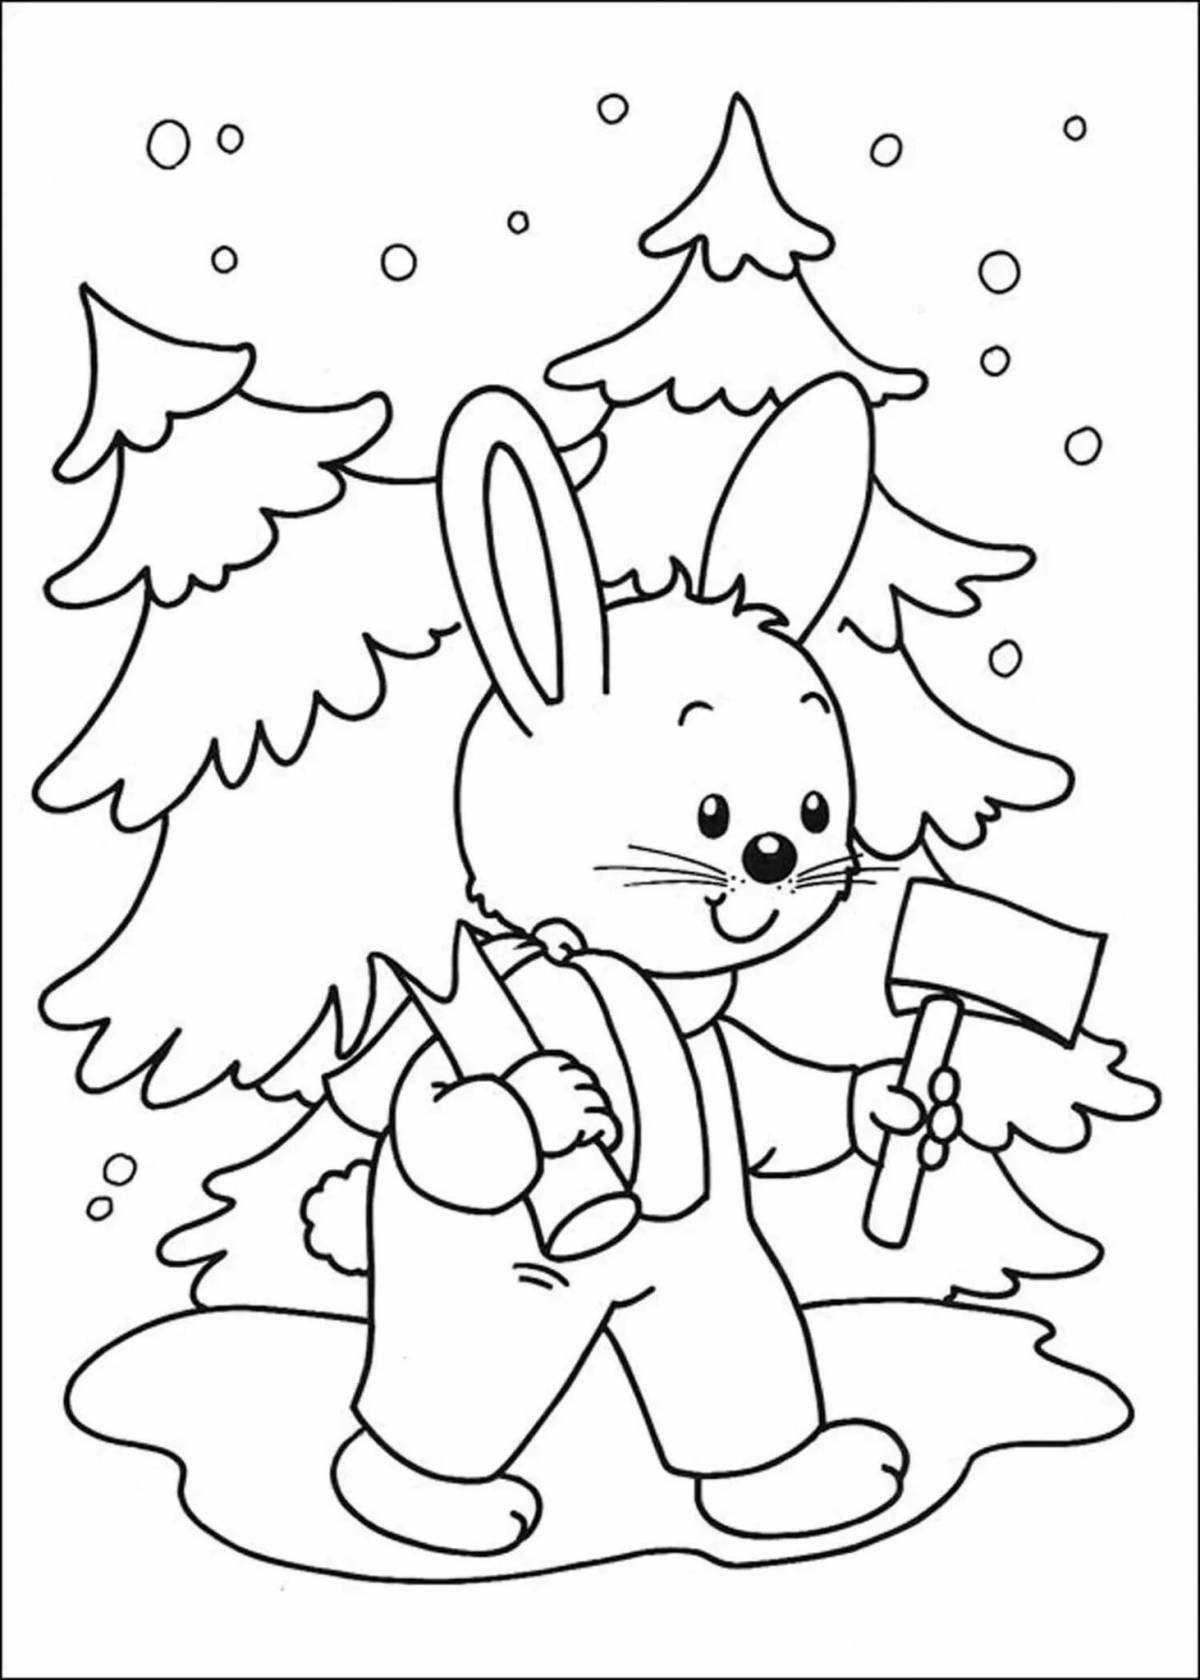 Coloring book playful Christmas rabbit